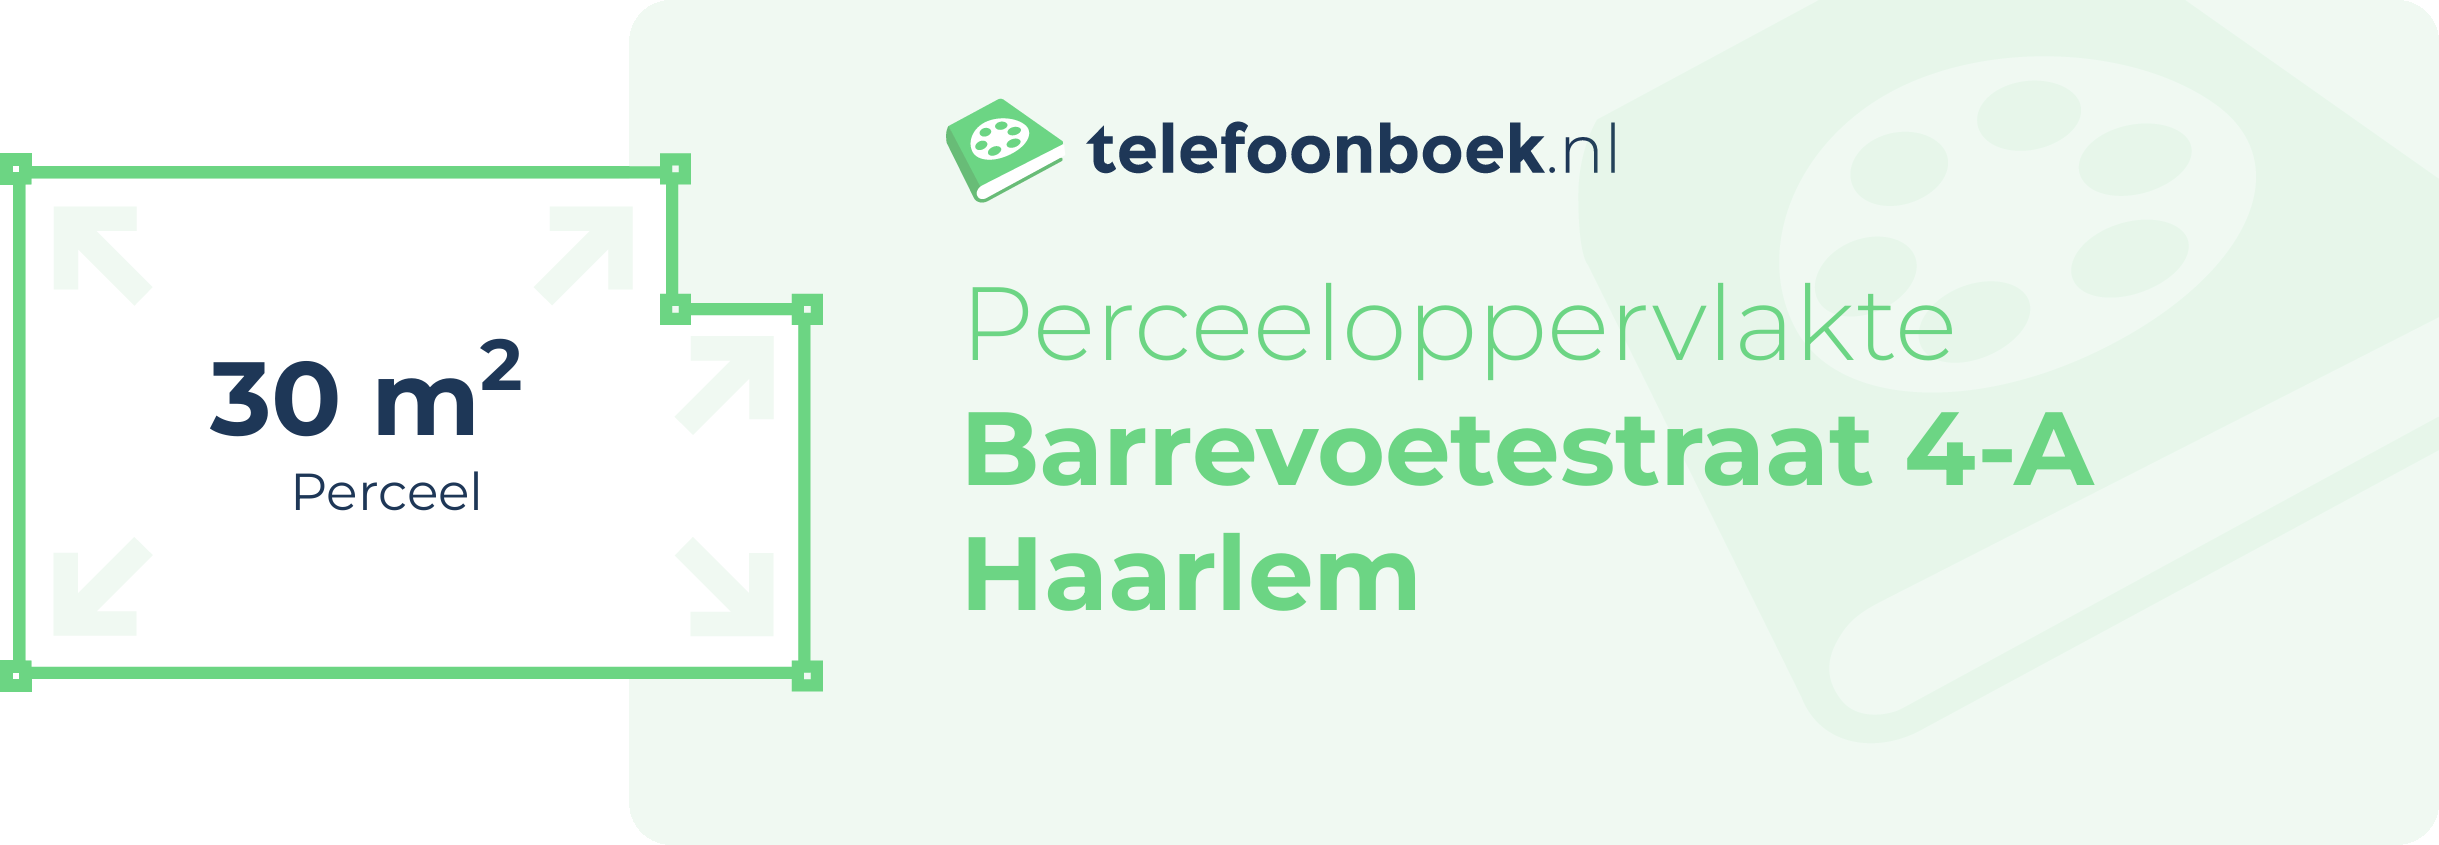 Perceeloppervlakte Barrevoetestraat 4-A Haarlem